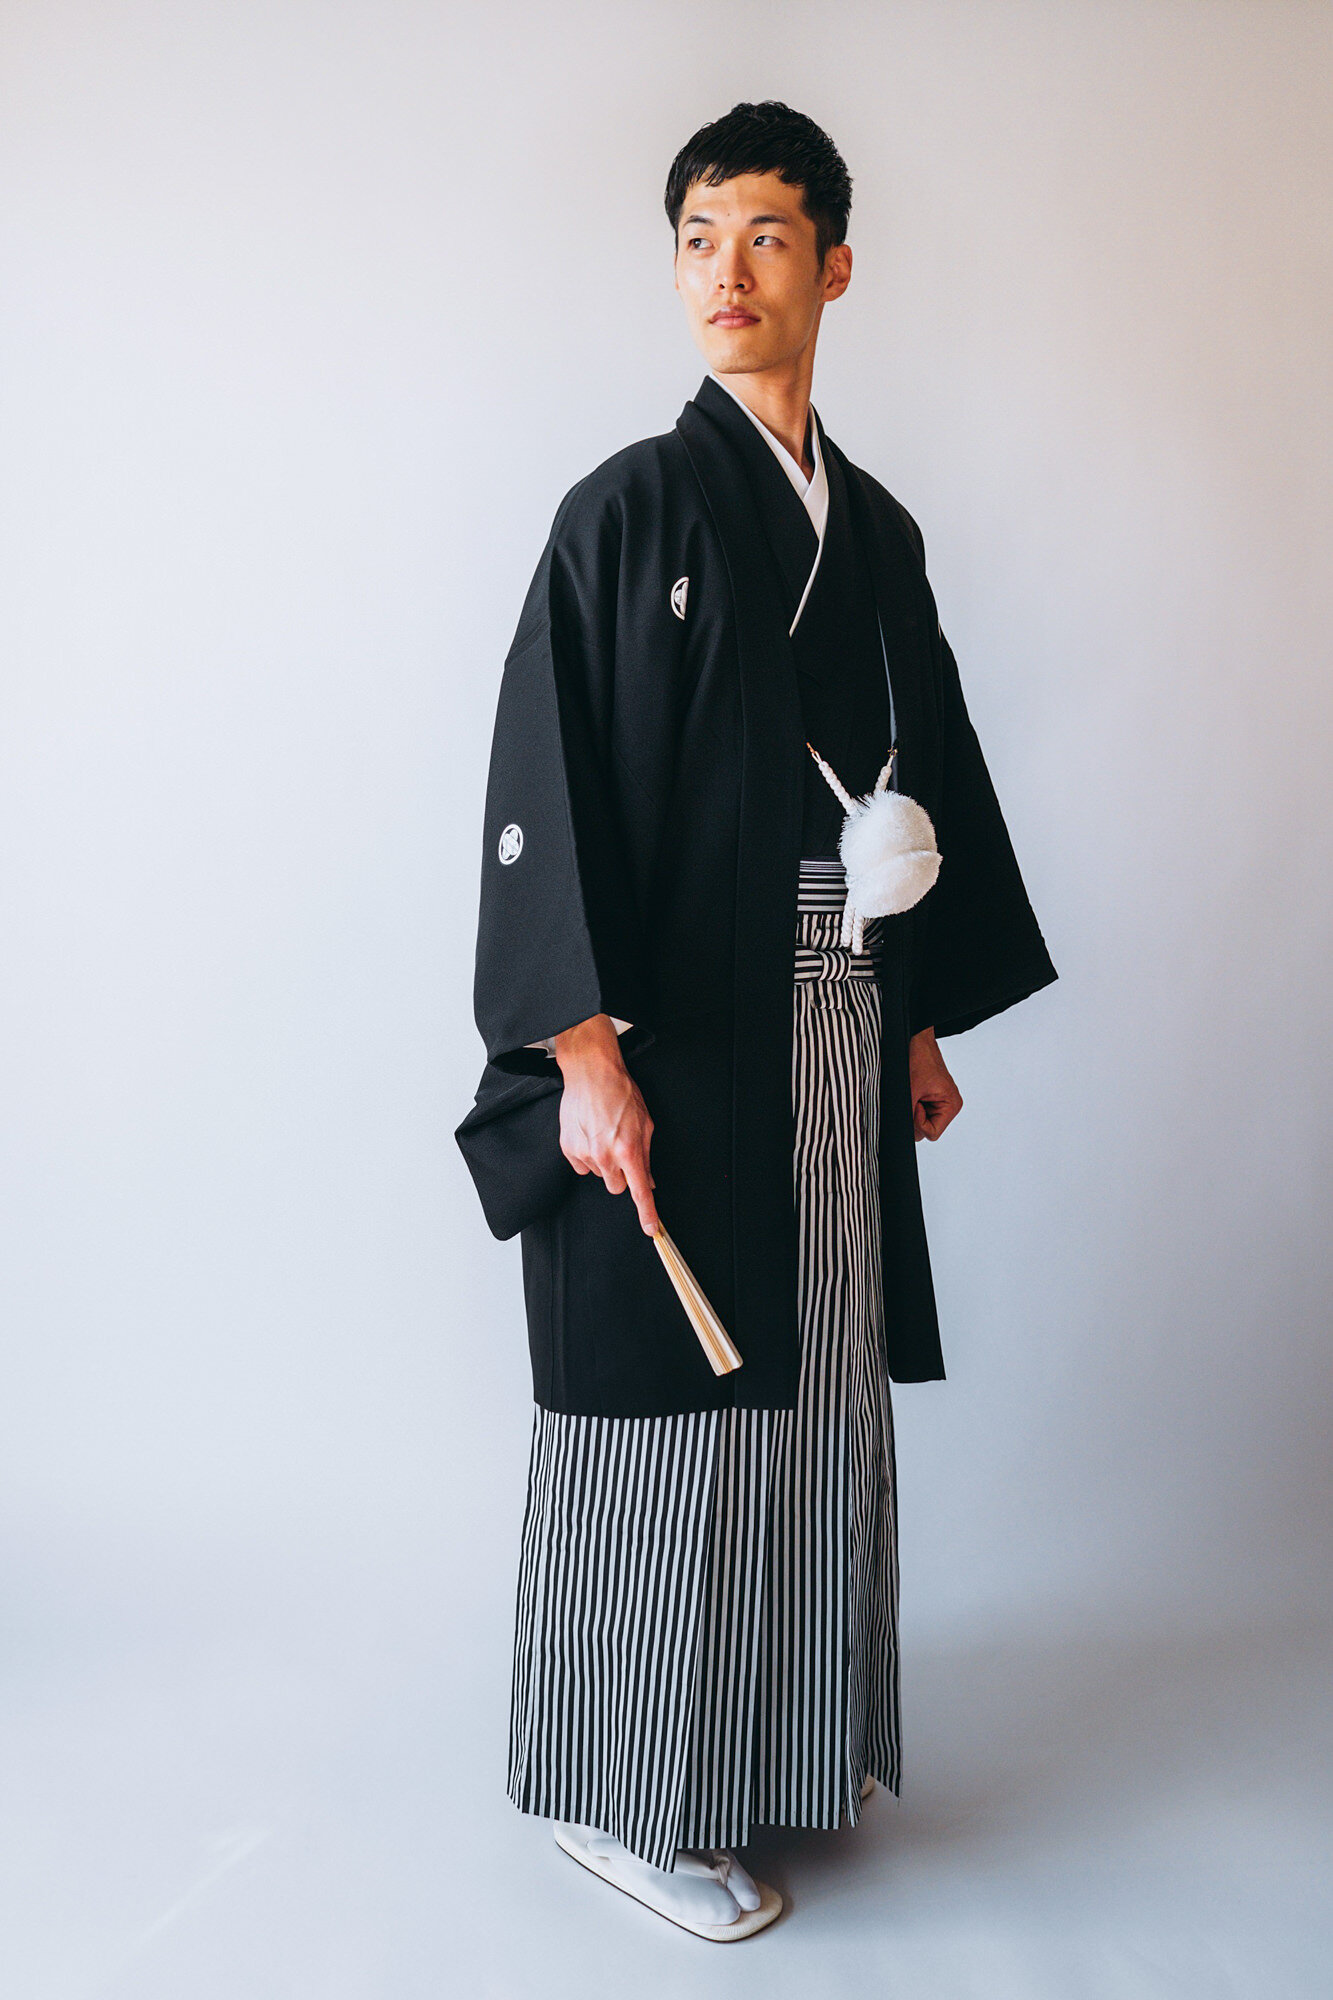 Japanese_bride_kimono-26.jpg